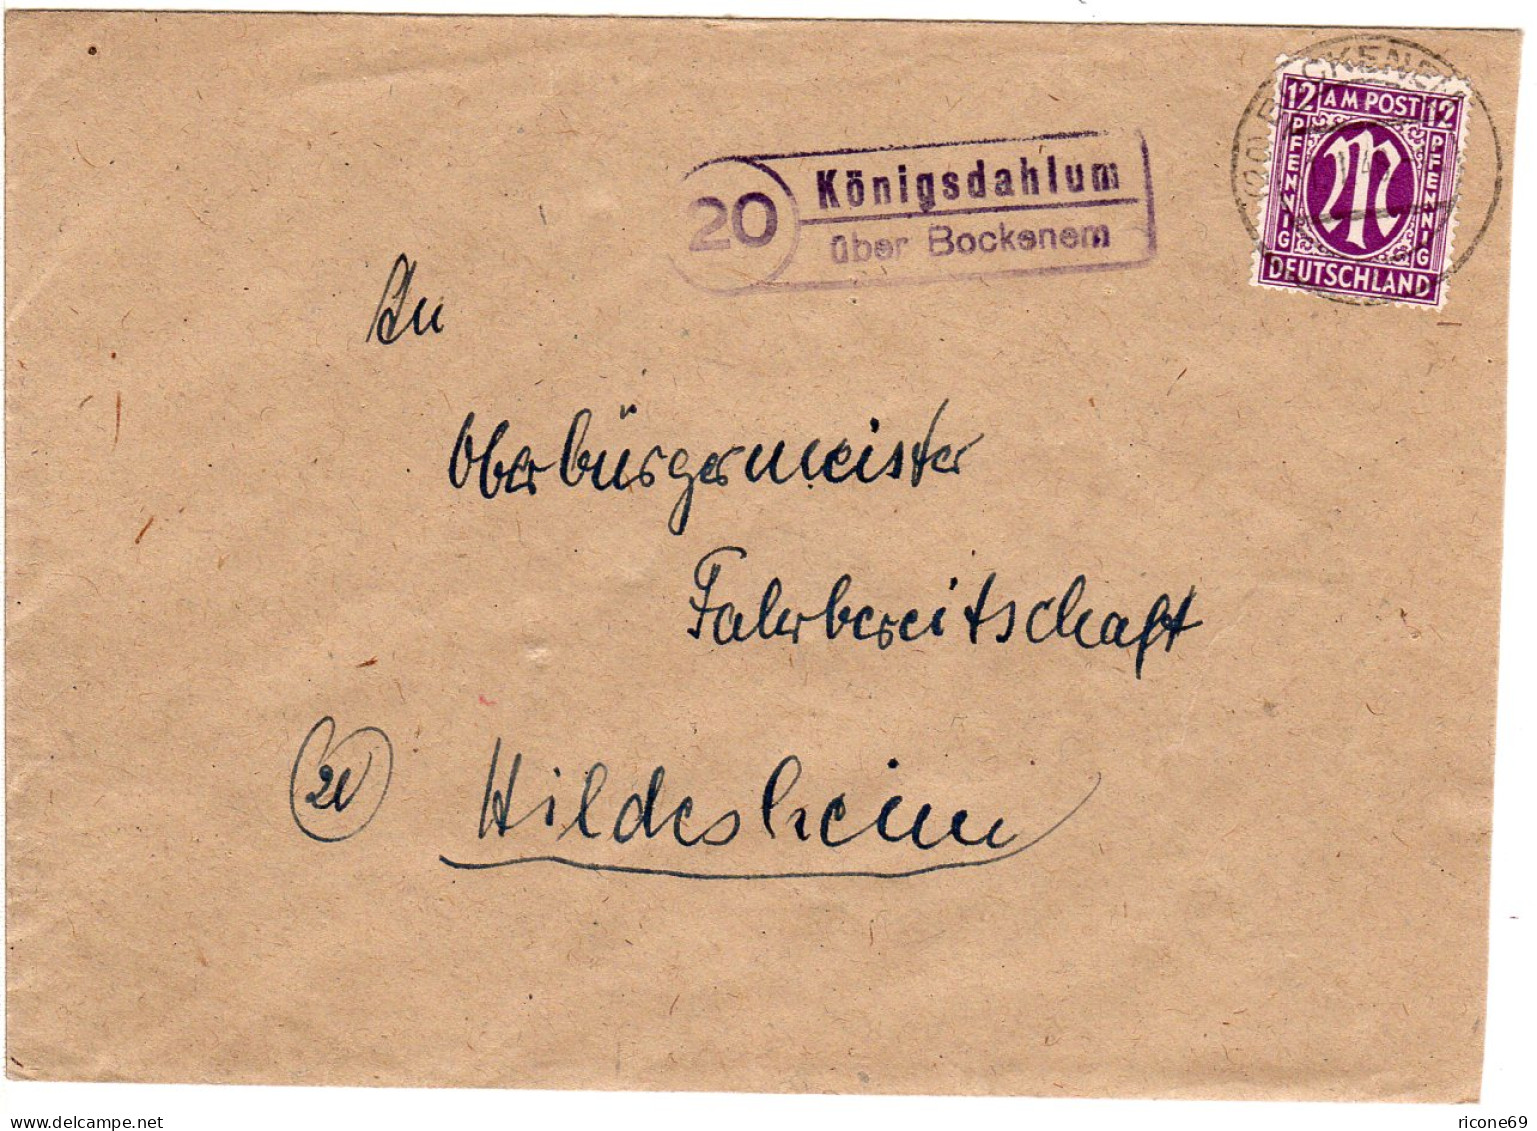 1948, Landpost Stpl. 20 KÖNIGSDAHLUM über Bockenem Auf Brief M. 12 Pf. - Covers & Documents